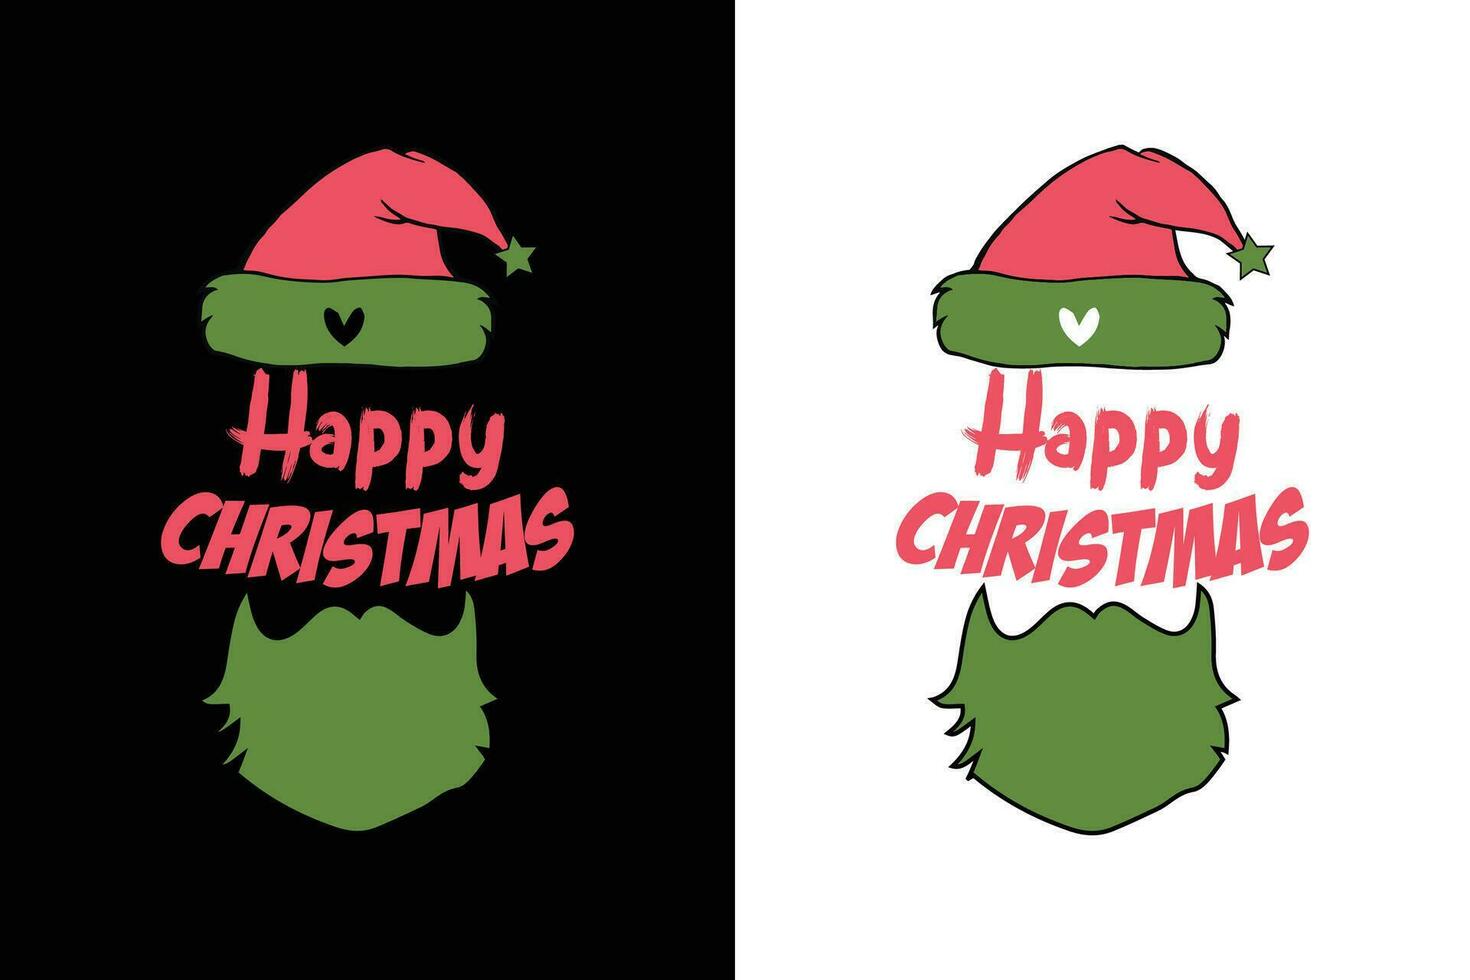 Happy Christmas T-Shirt Design Template. Vector illustration.